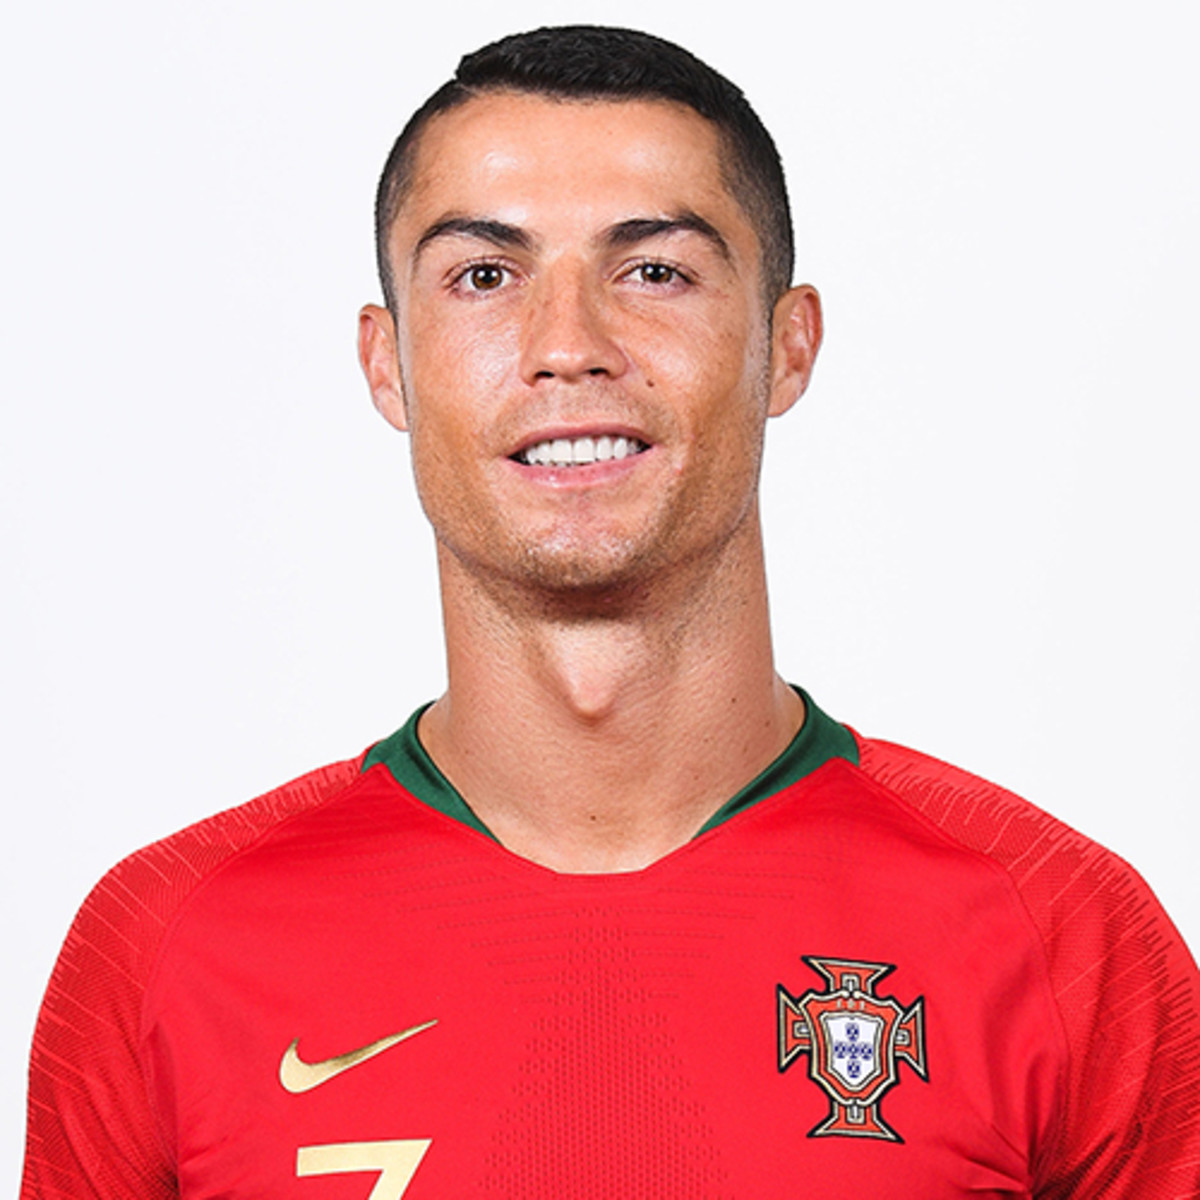 Cristiano Ronaldo, The Second Highest Scorer